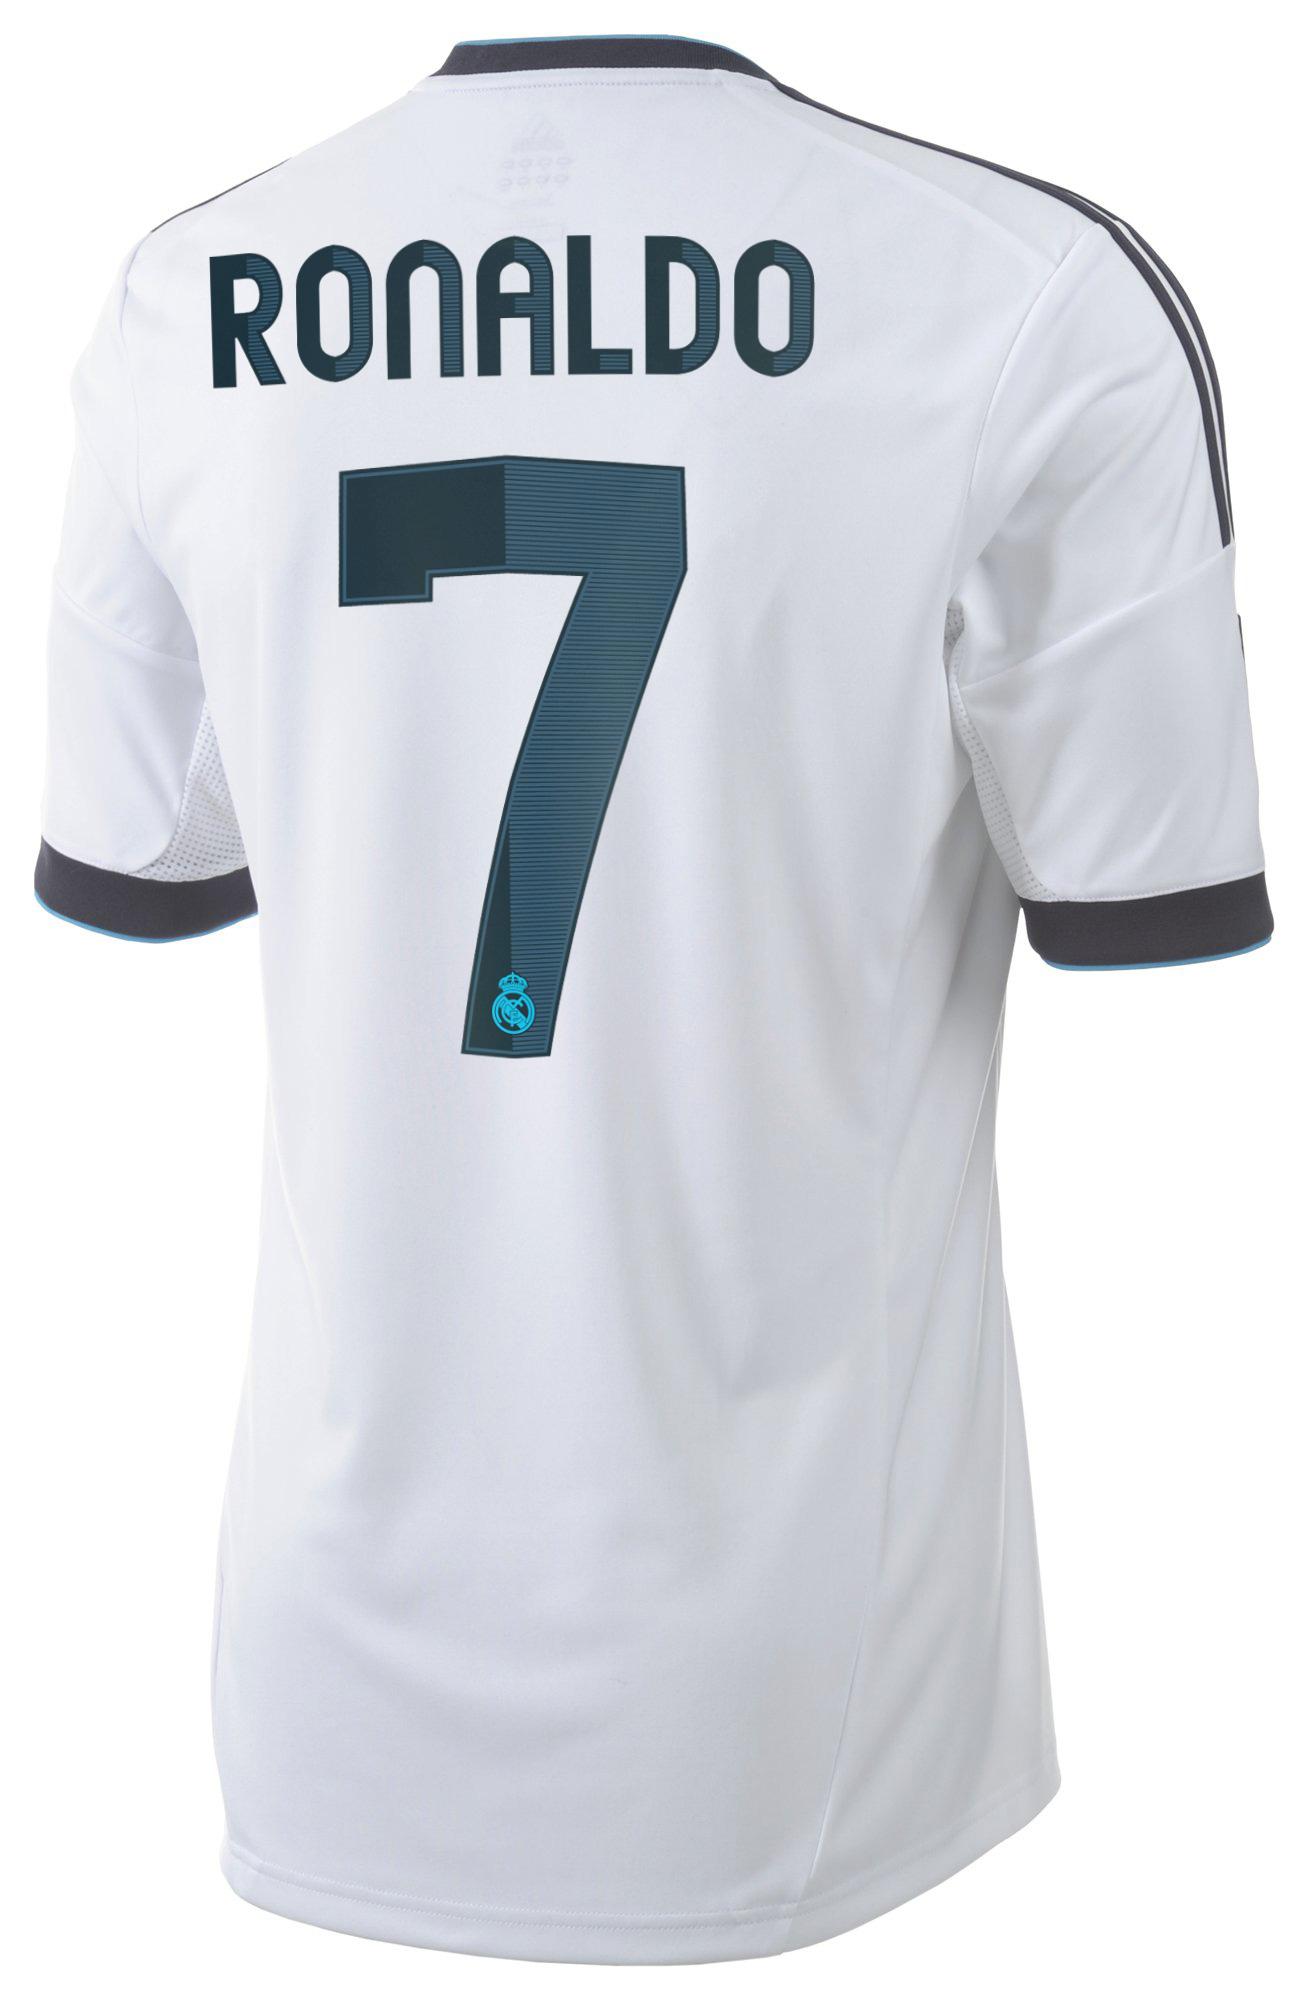 Foto adidas Real Madrid Home Jersey Ronaldo 7 foto 2798